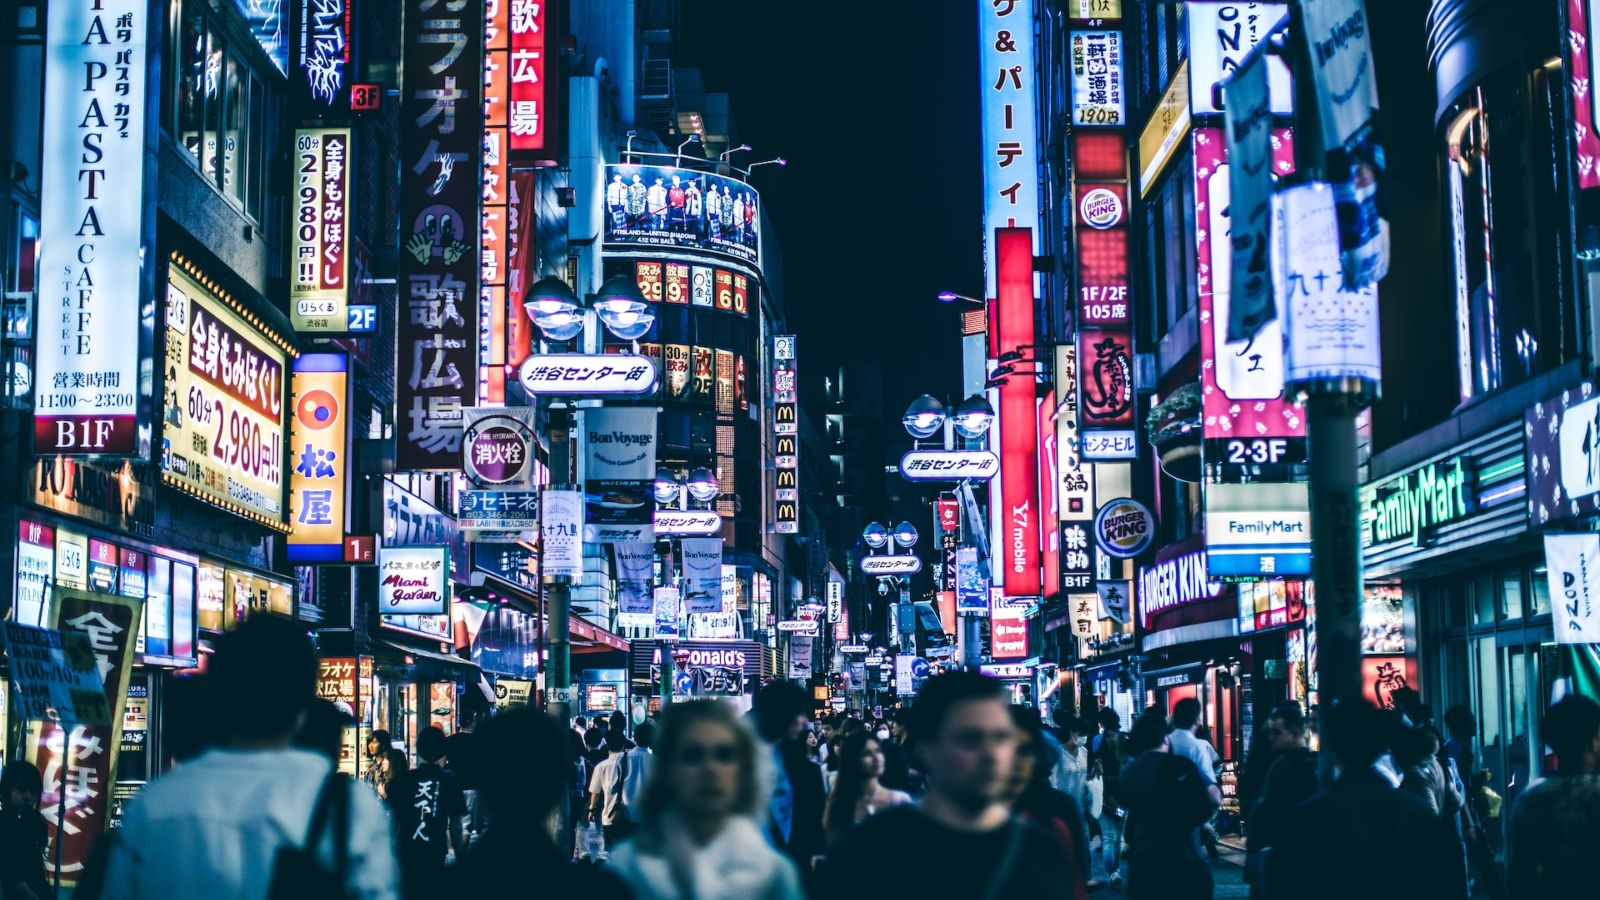 Tokyo streets at night - Point Hacks